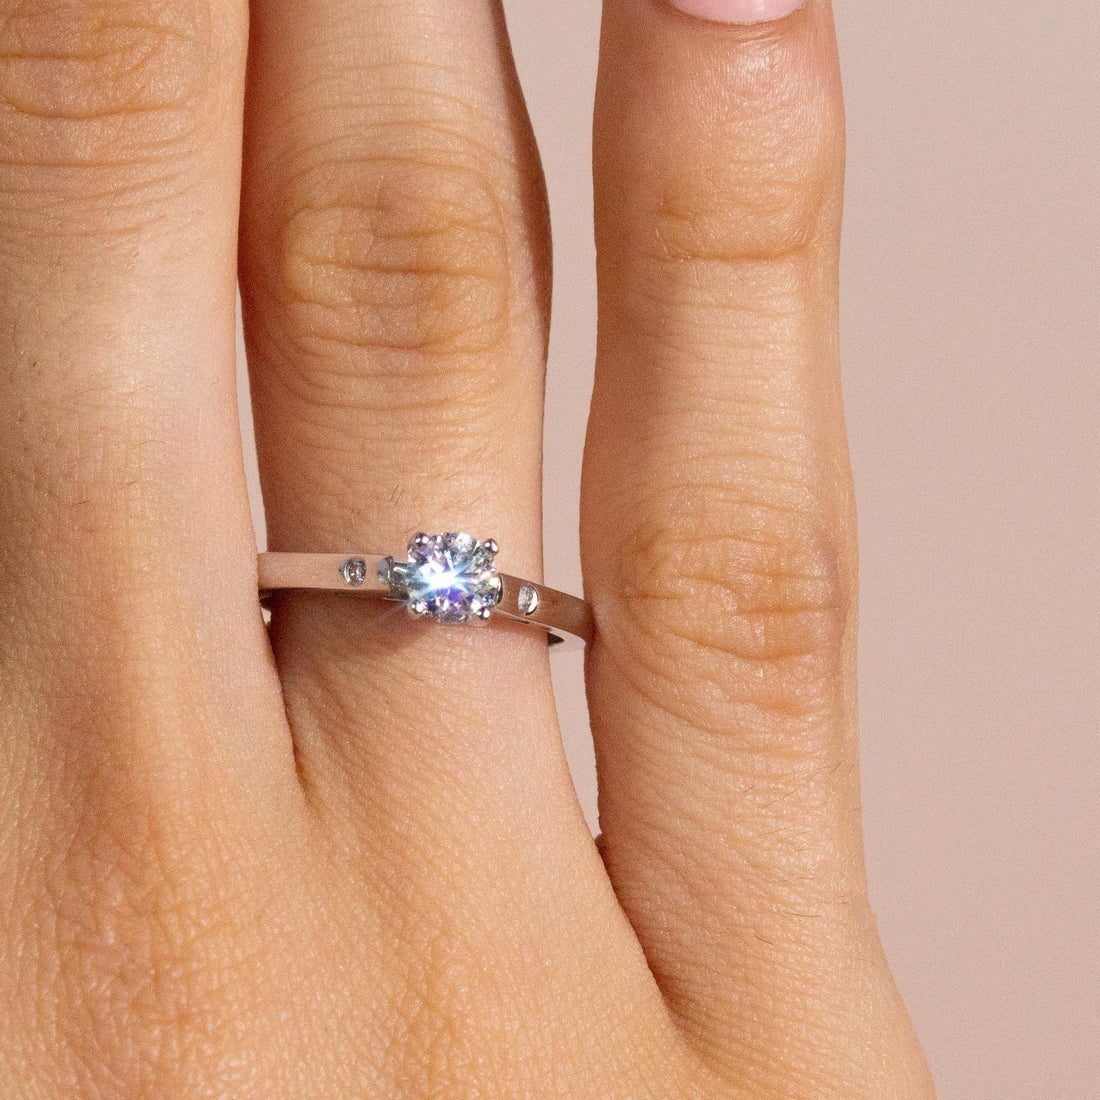 0.4 carat diamond ring on finger, solitaire diamond engagement ring